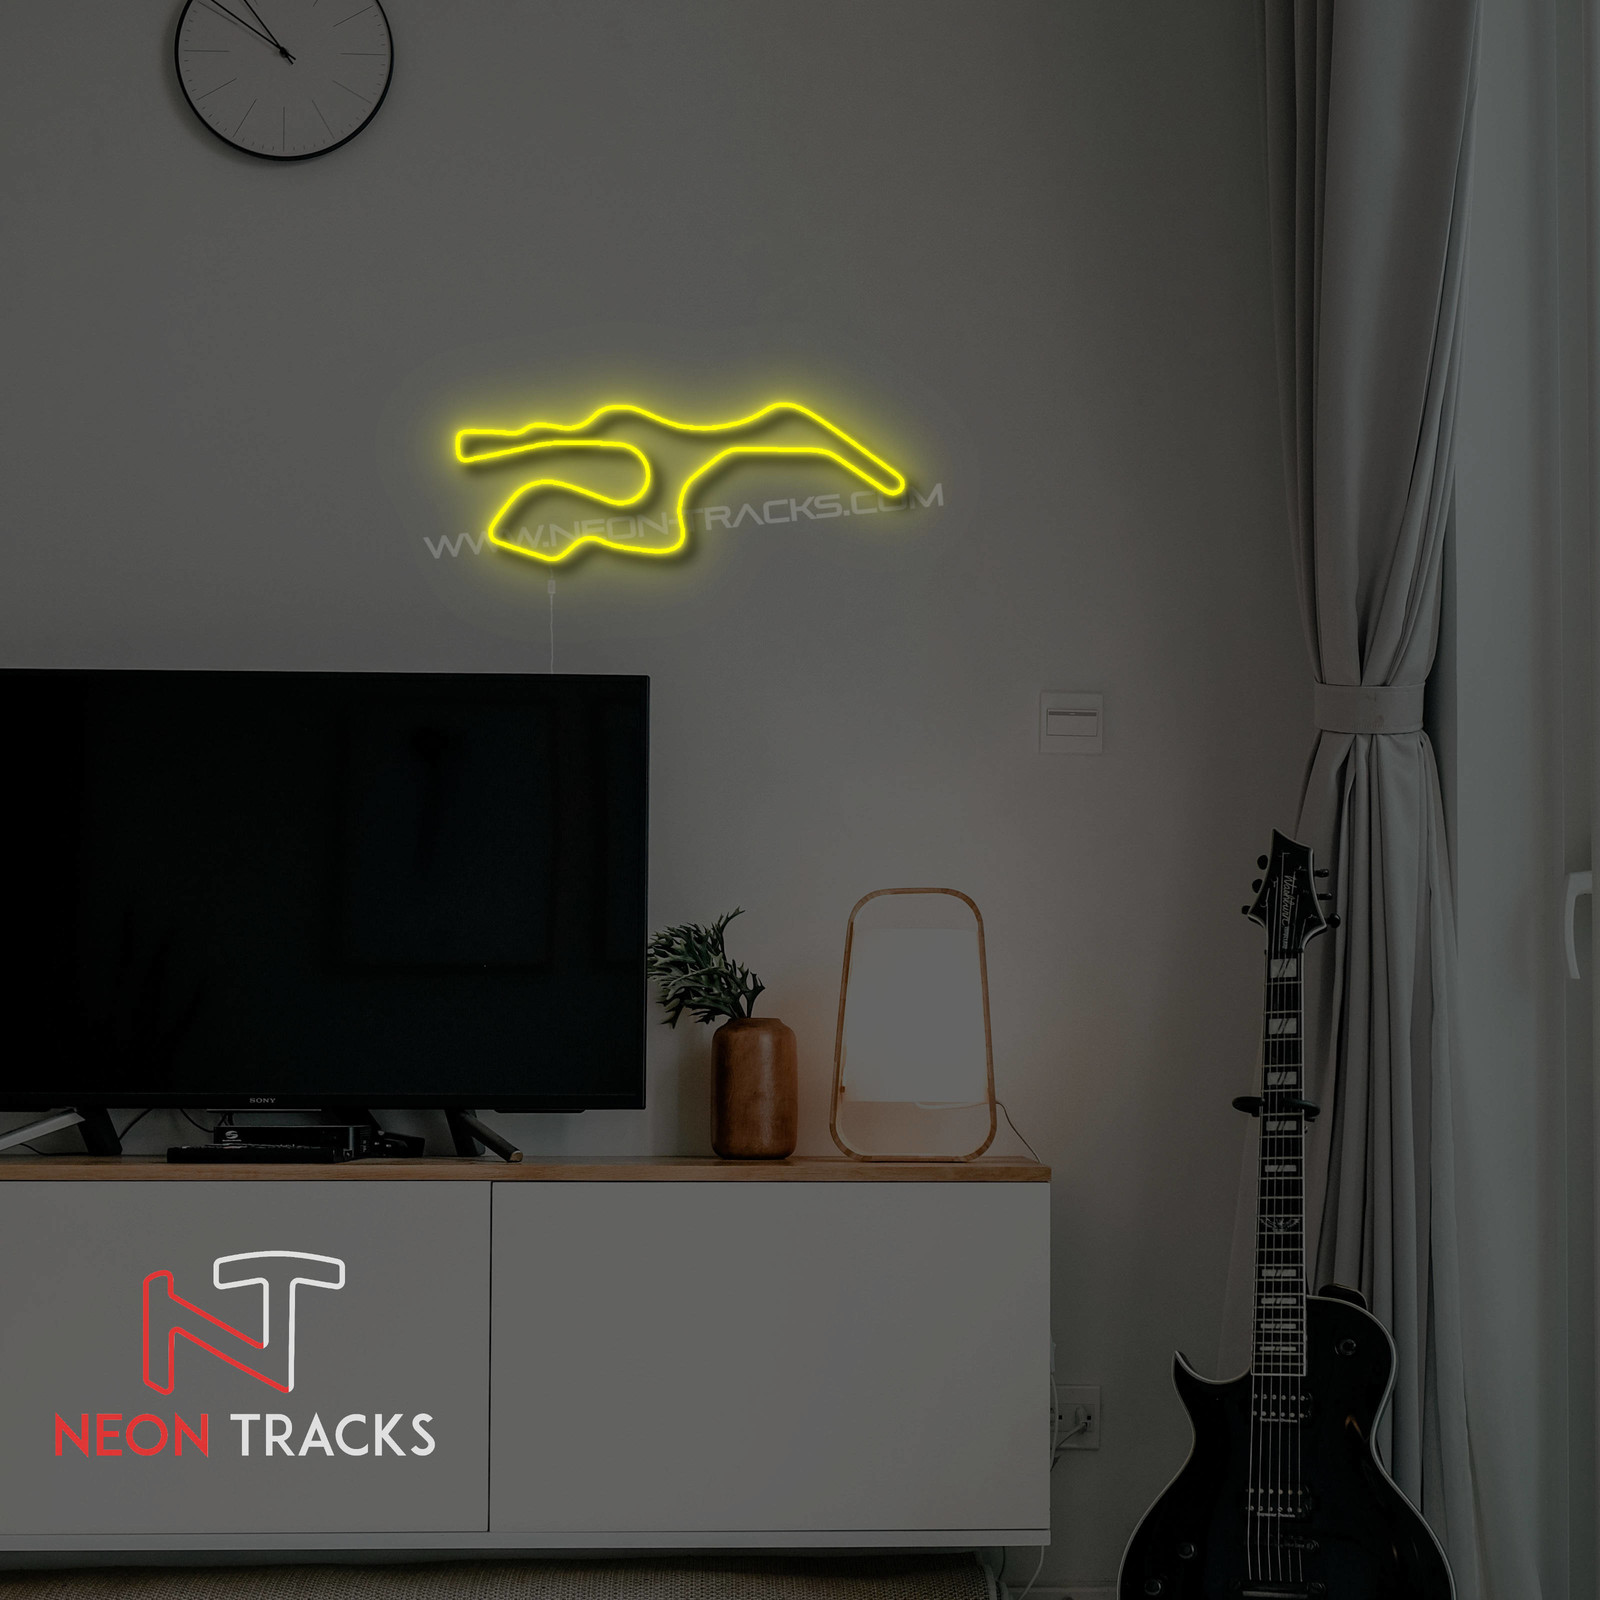 Neon Tracks Sonoma Raceway - Verenigde Staten van Amerika